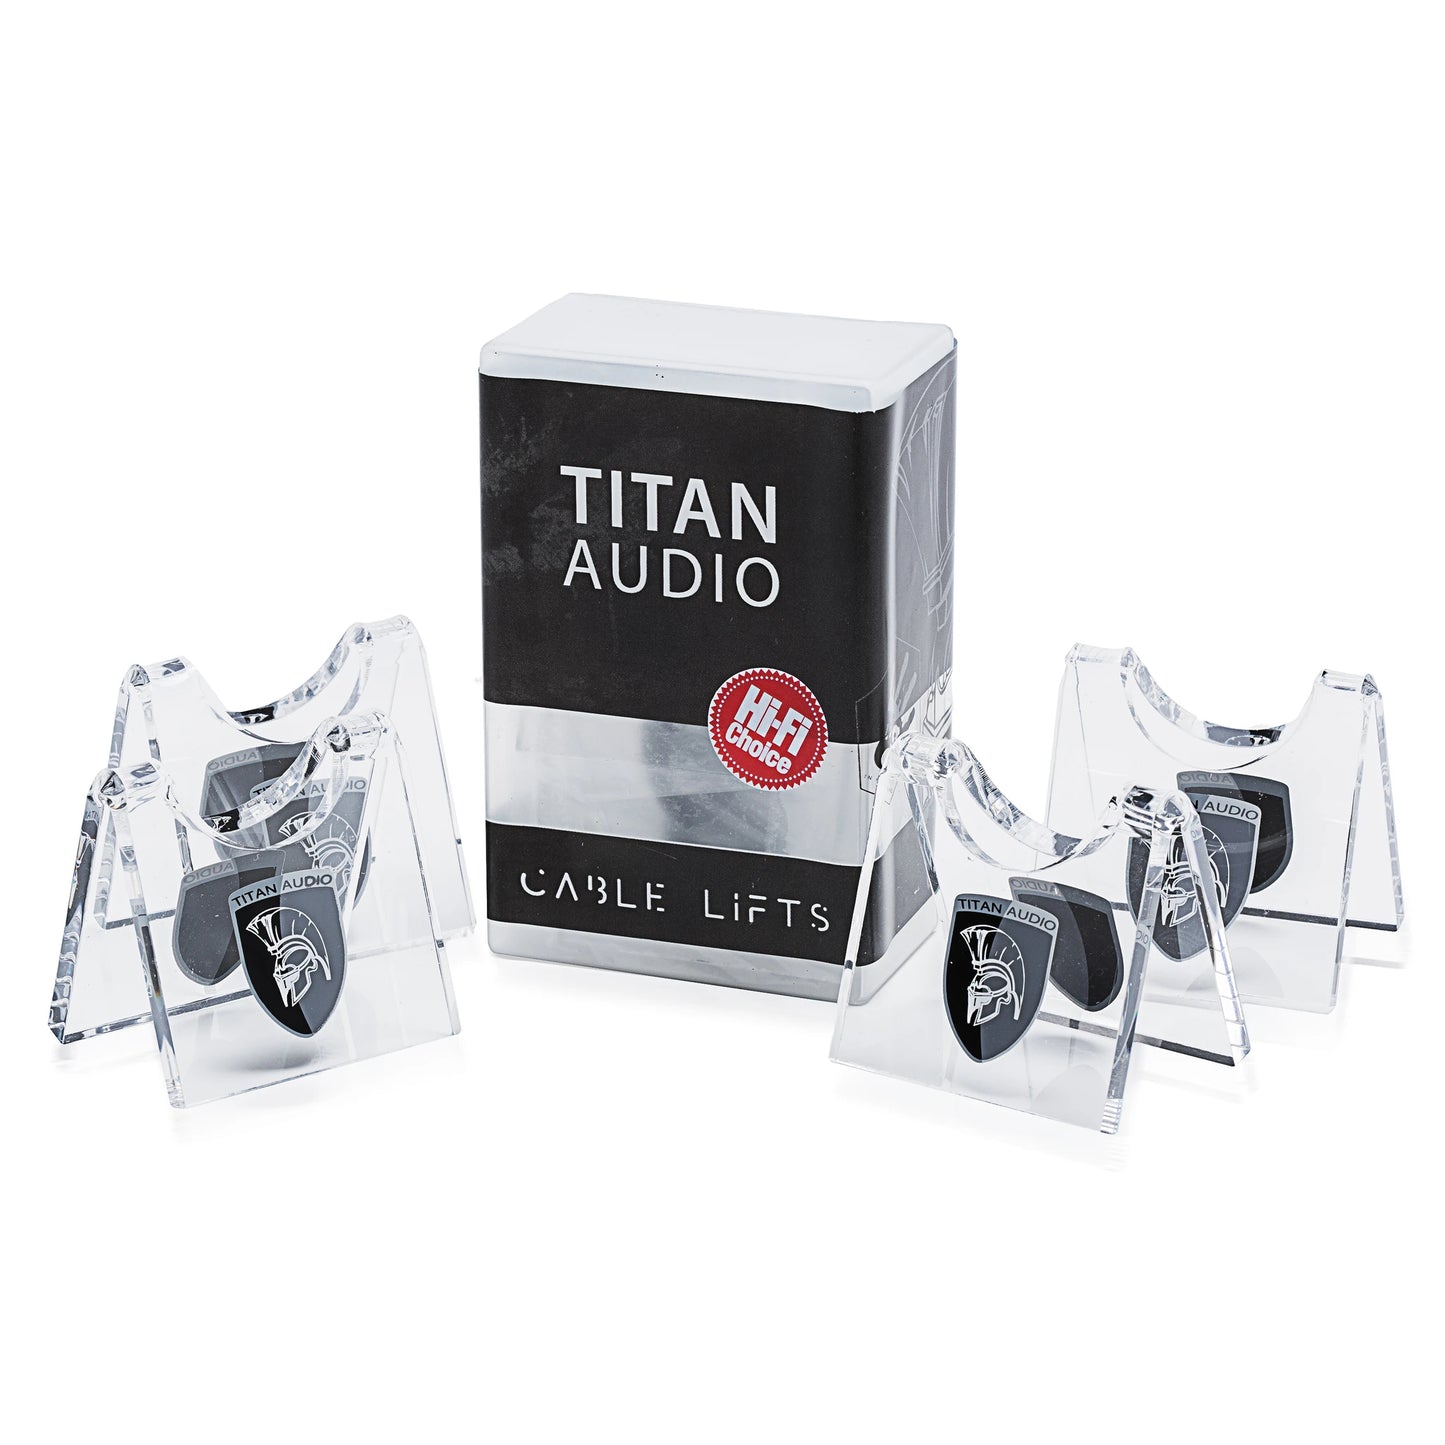 Titan Audio Cable Lifts